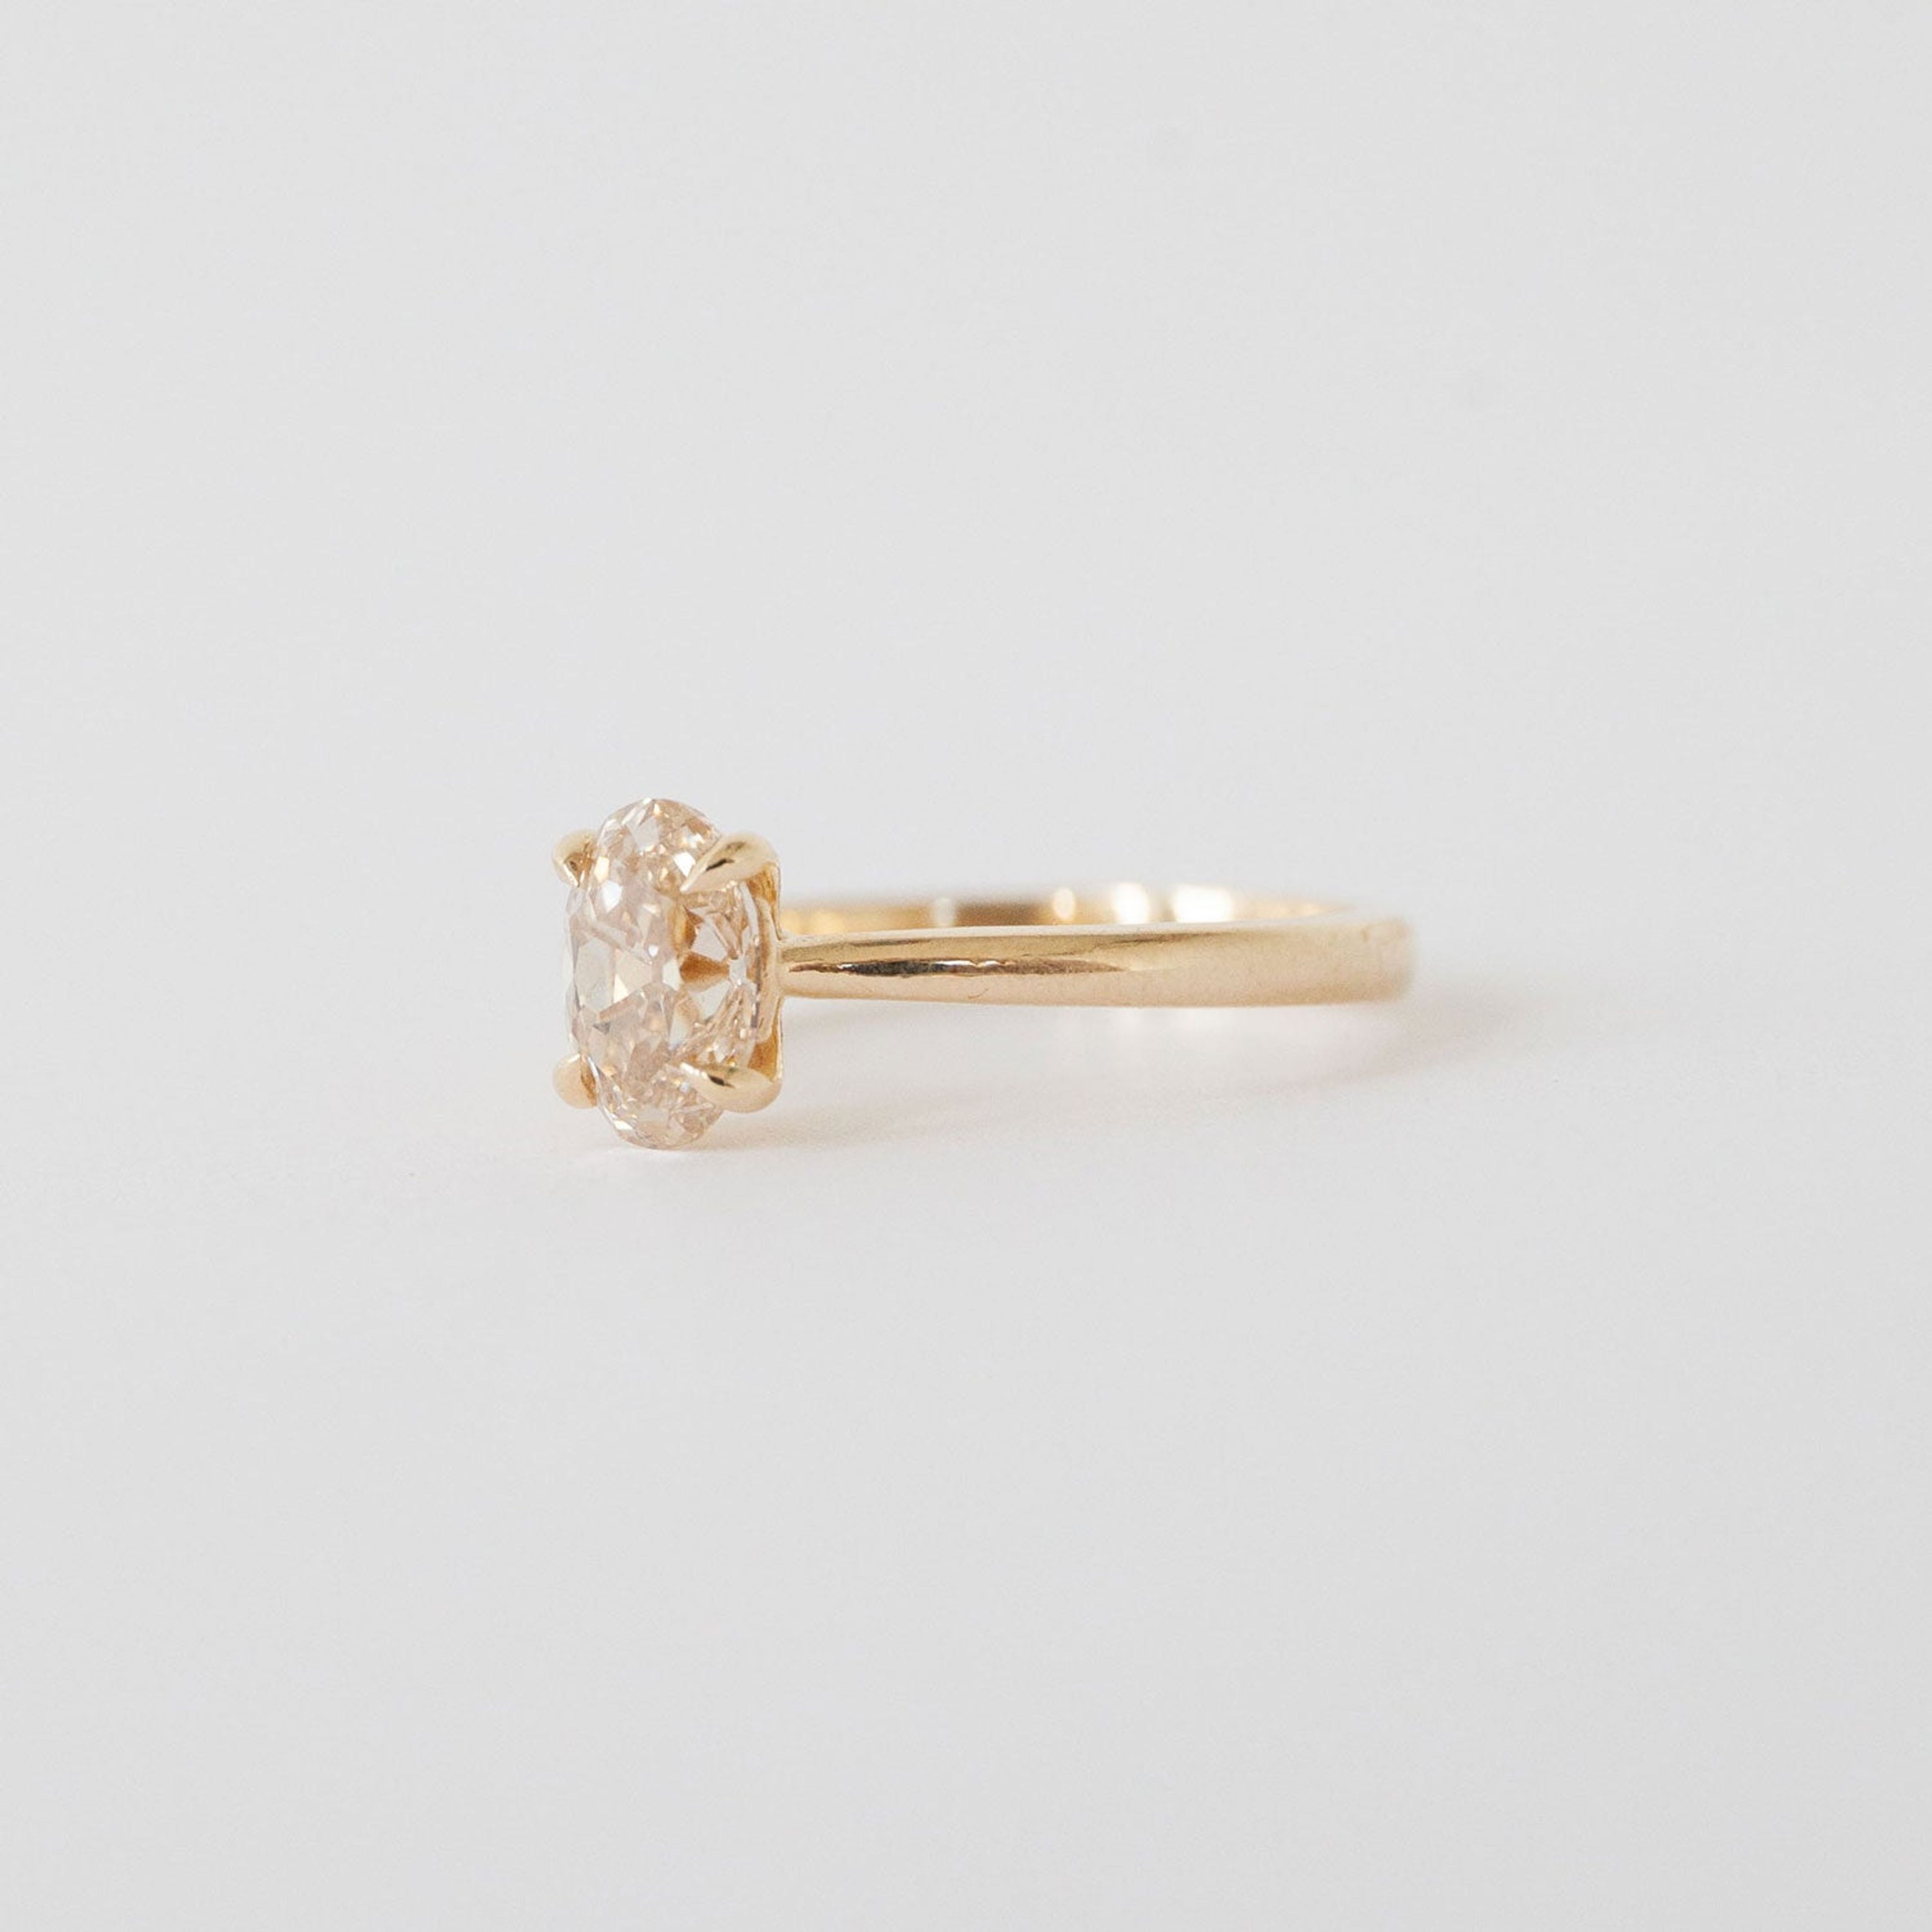 Celine Ring - Champagne Diamond